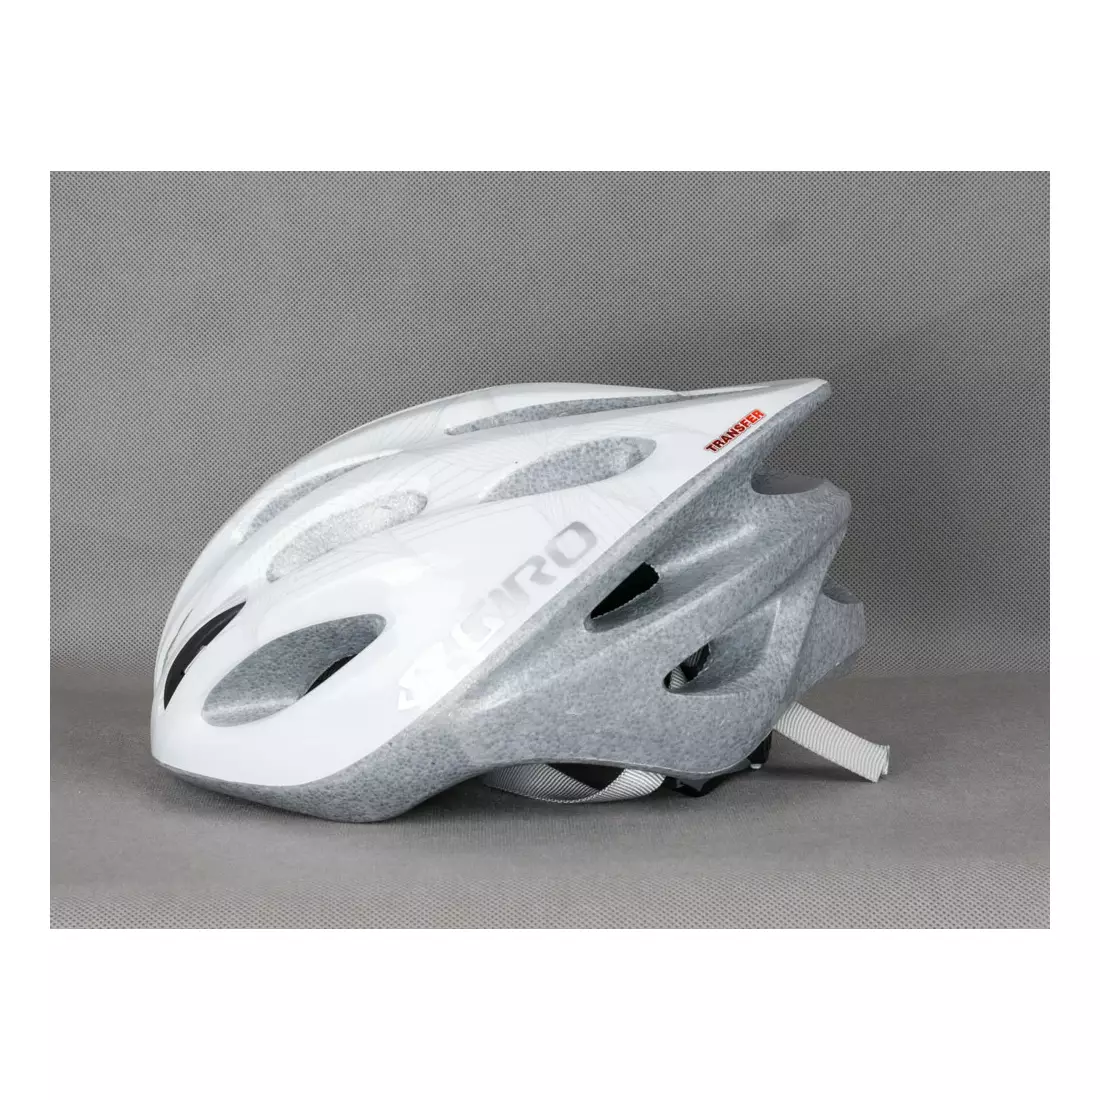 GIRO TRANSFER bicycle helmet, women's